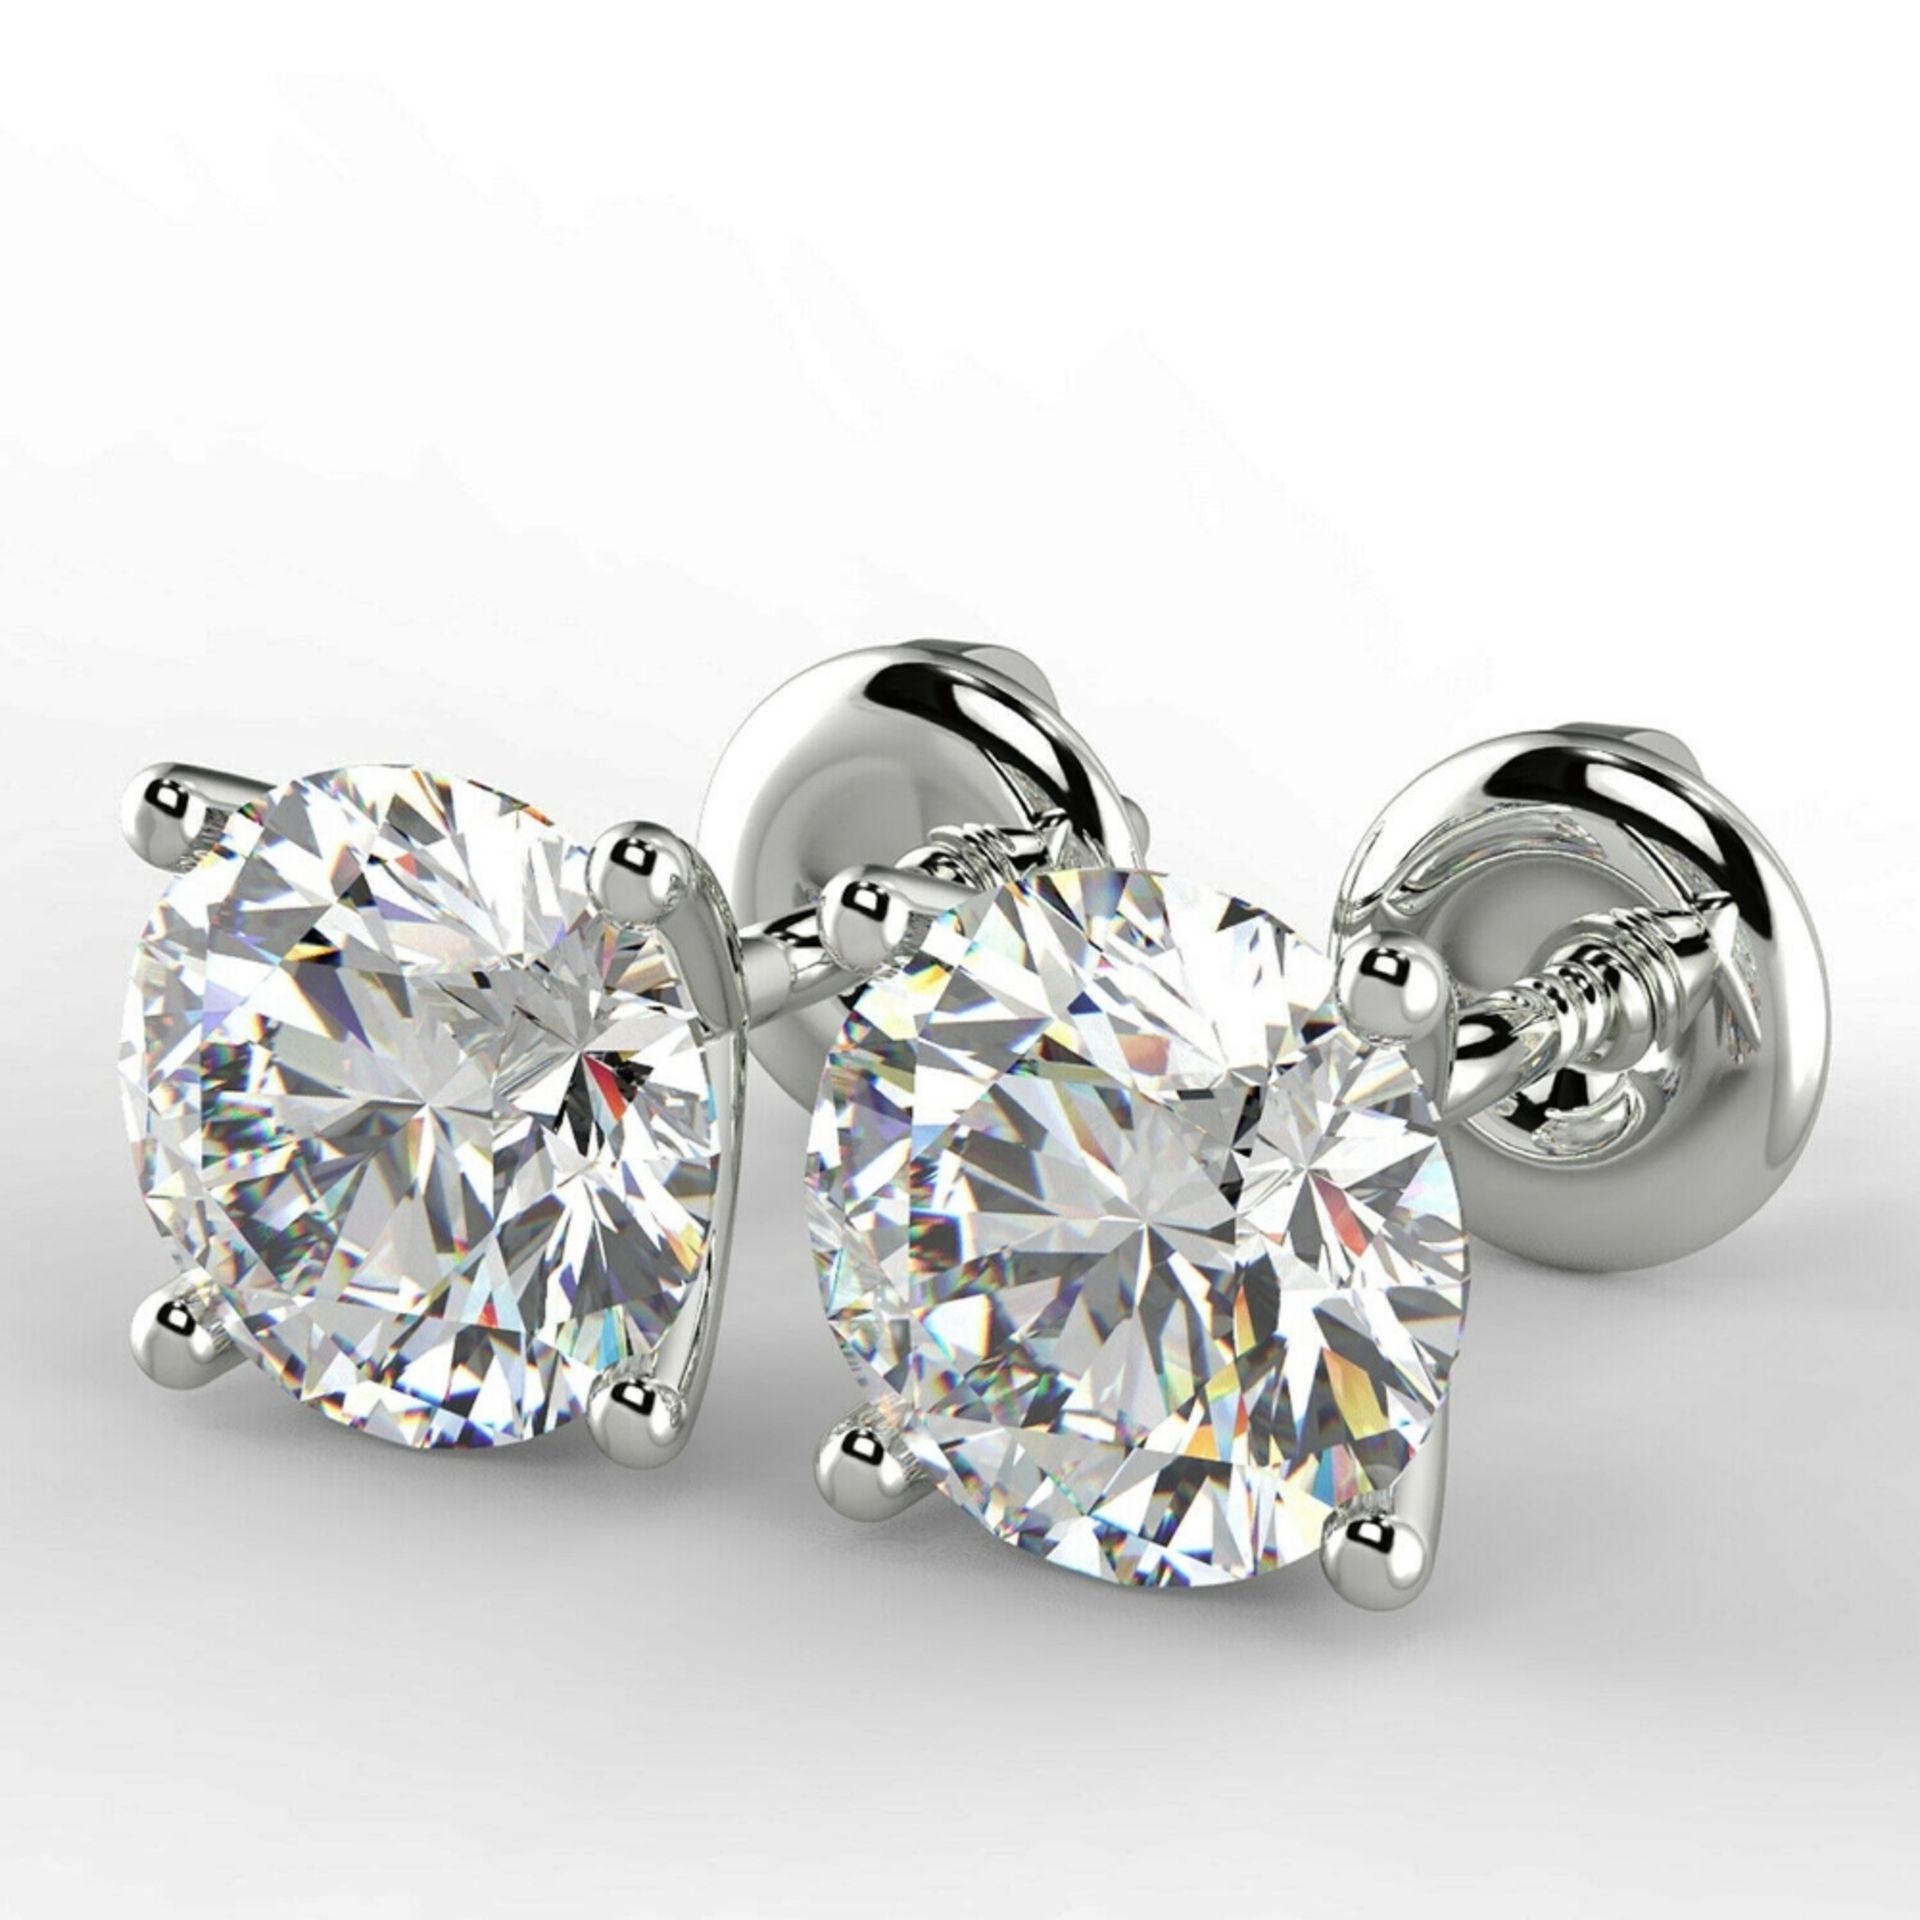 Pair of New 0.52 Carat Round Cut VS1/D Diamond Stud Earrings On 14K Hallmarked White Gold